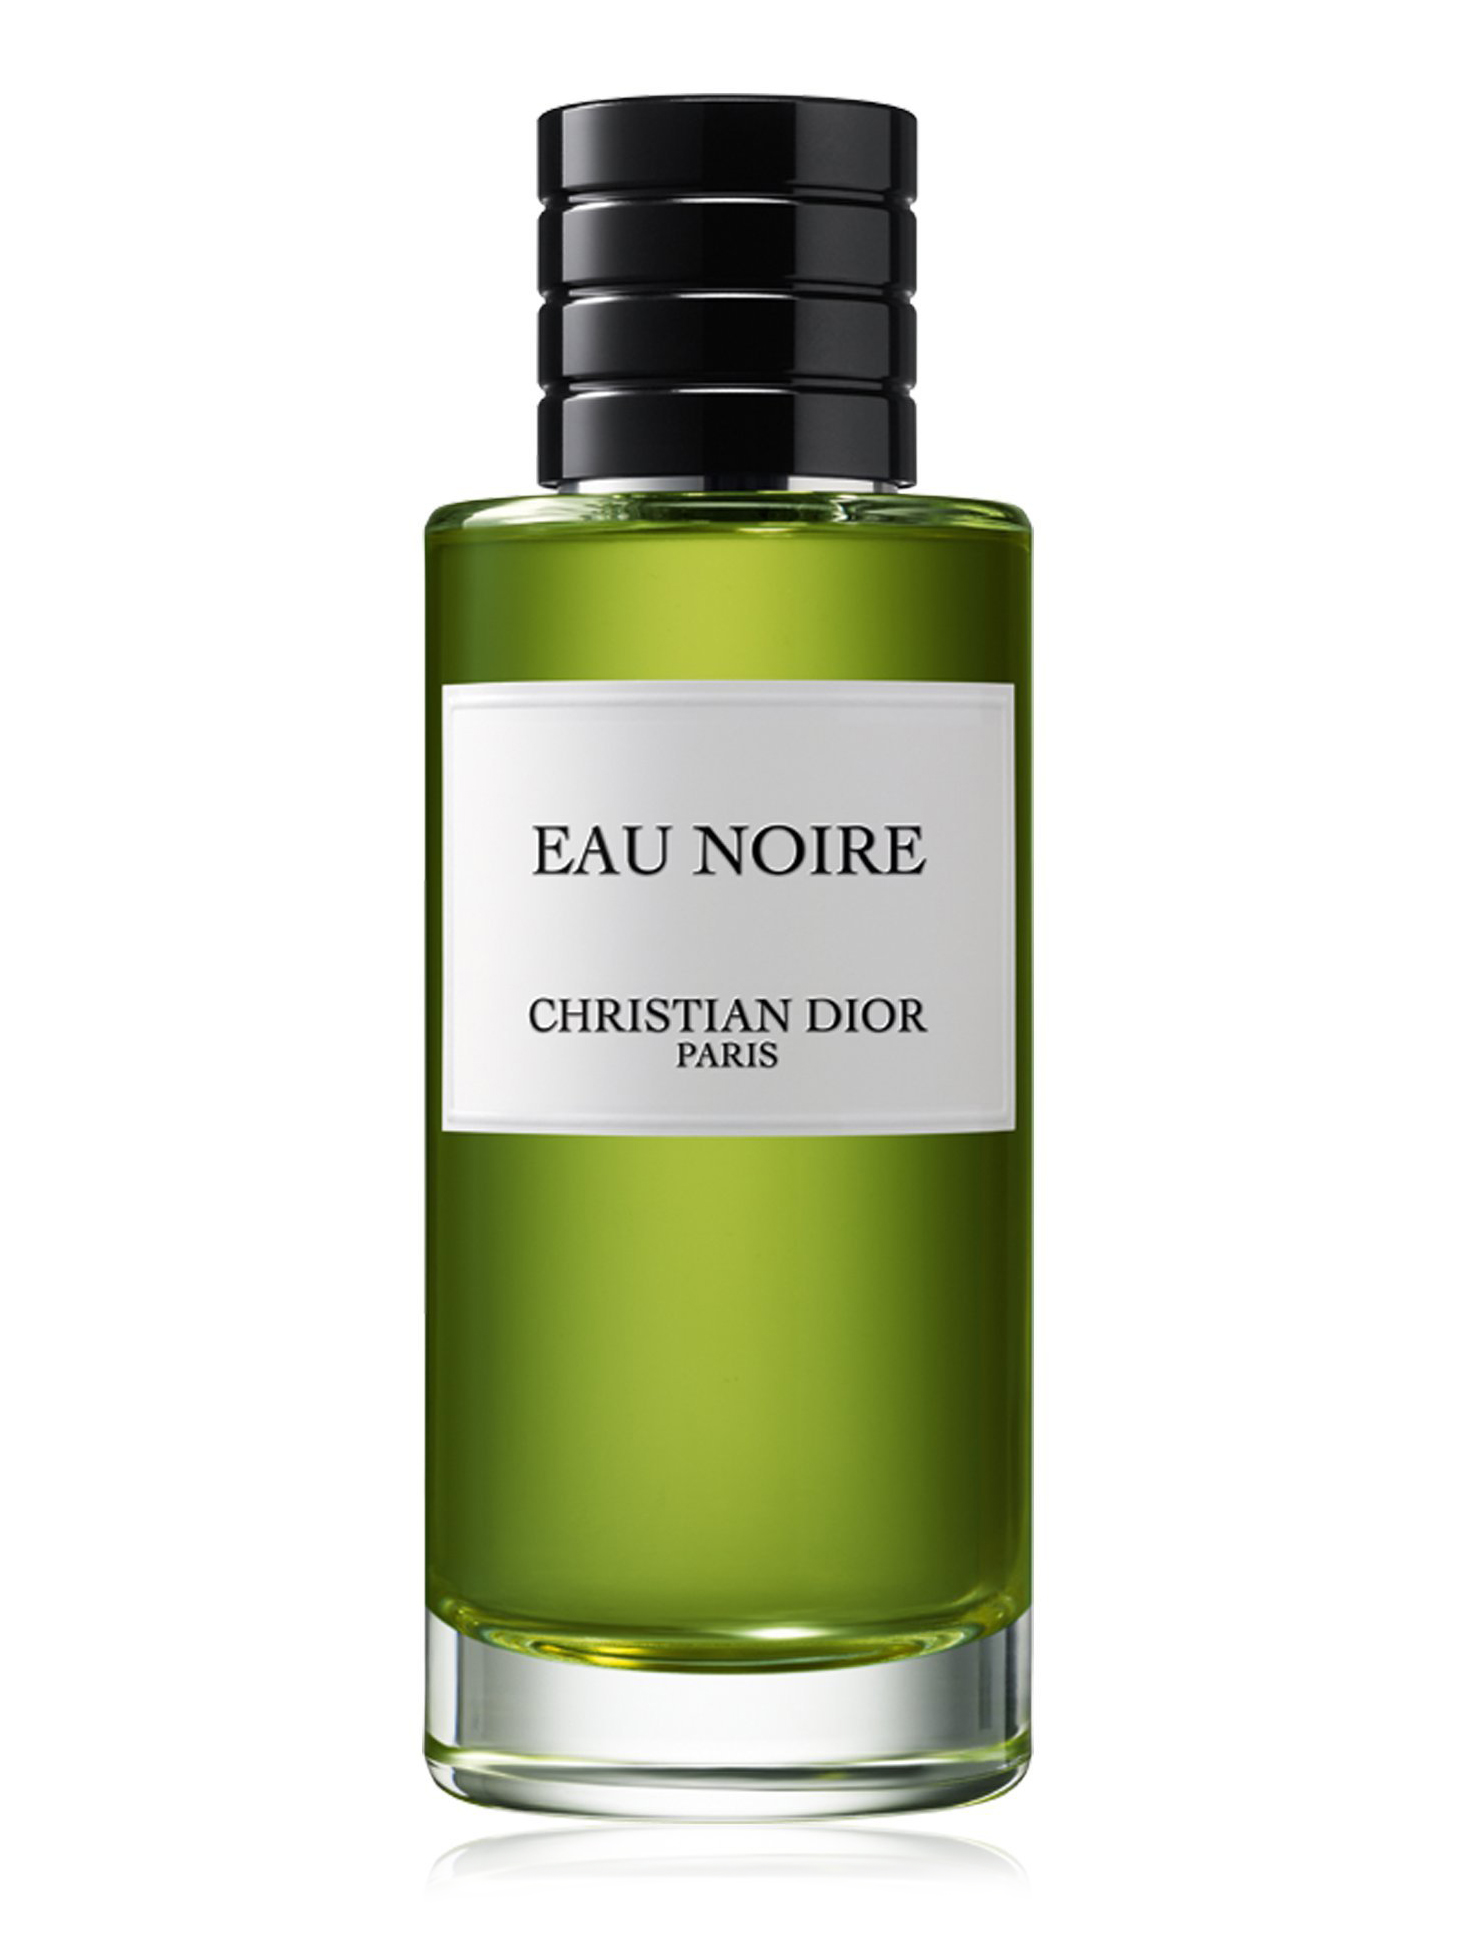 Eau Noire Christian Dior perfume - a fragrance for women and men 2004